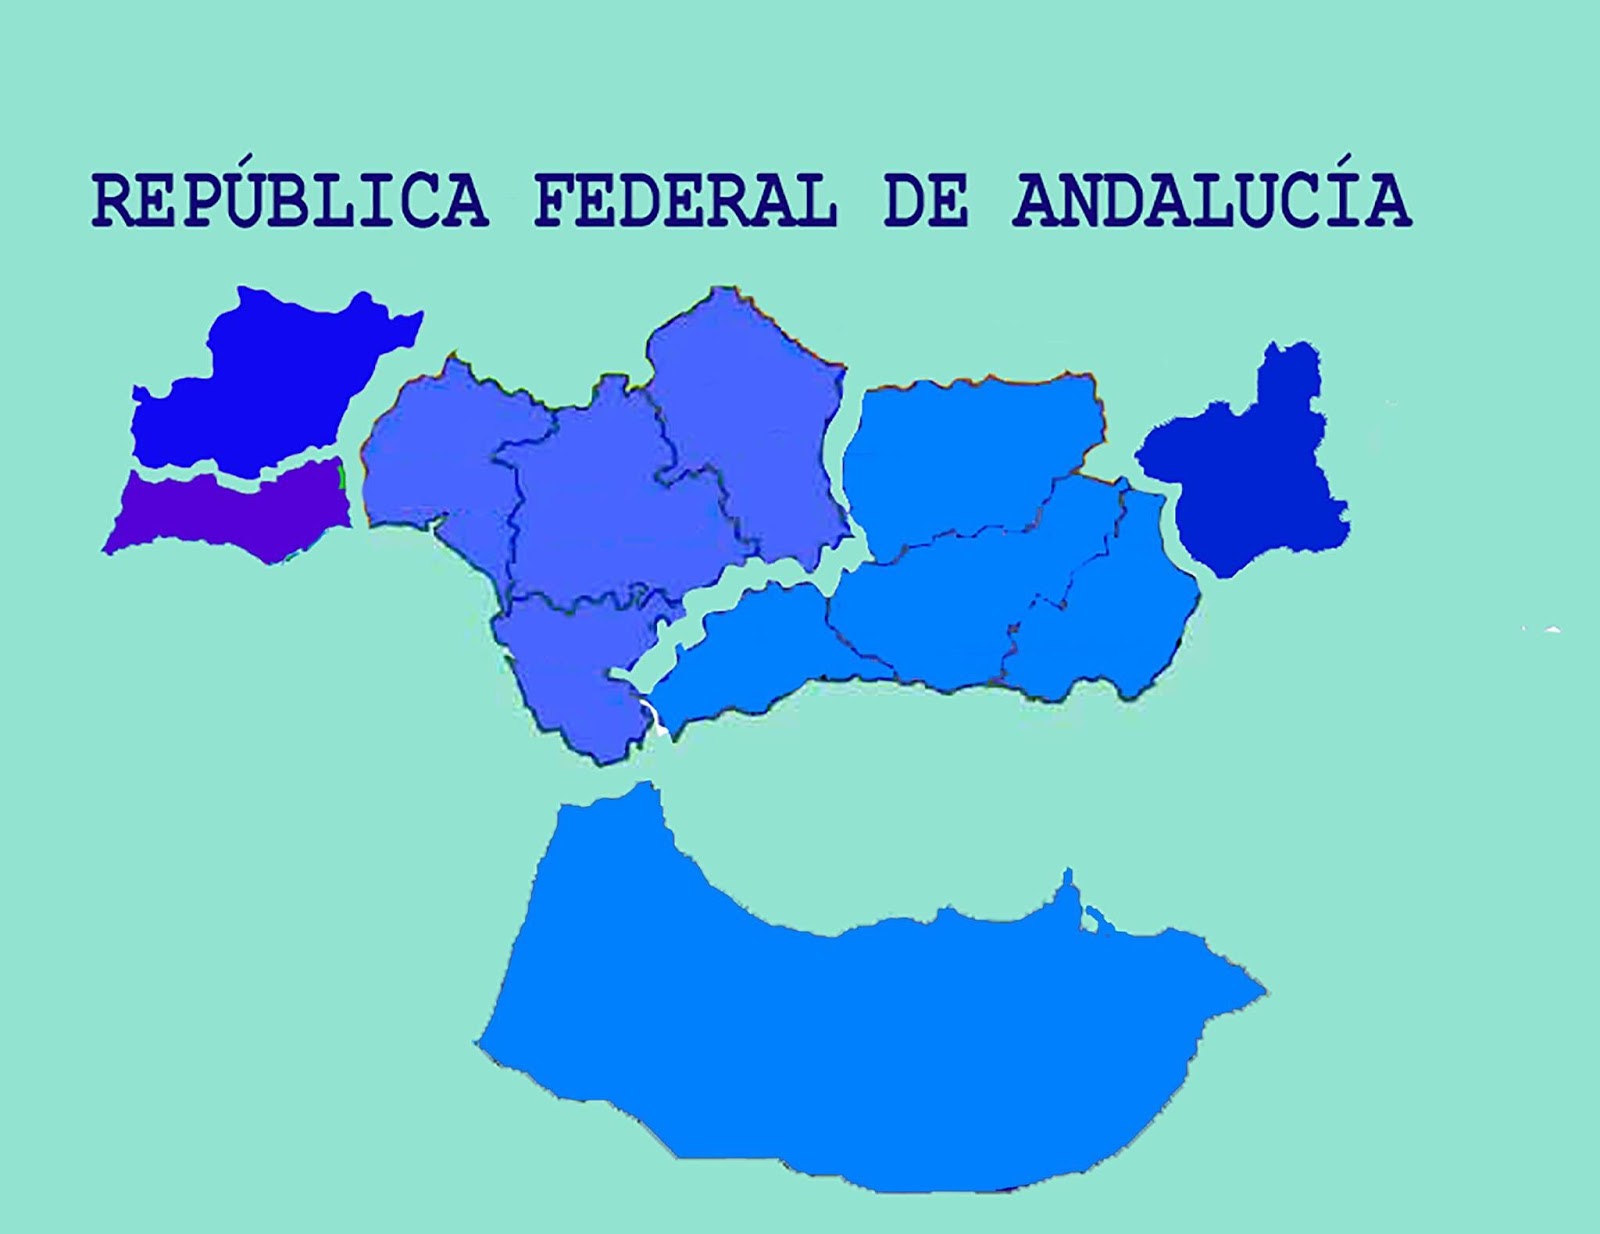 Para ti, cual deberia de ser la capital de Andalucia?